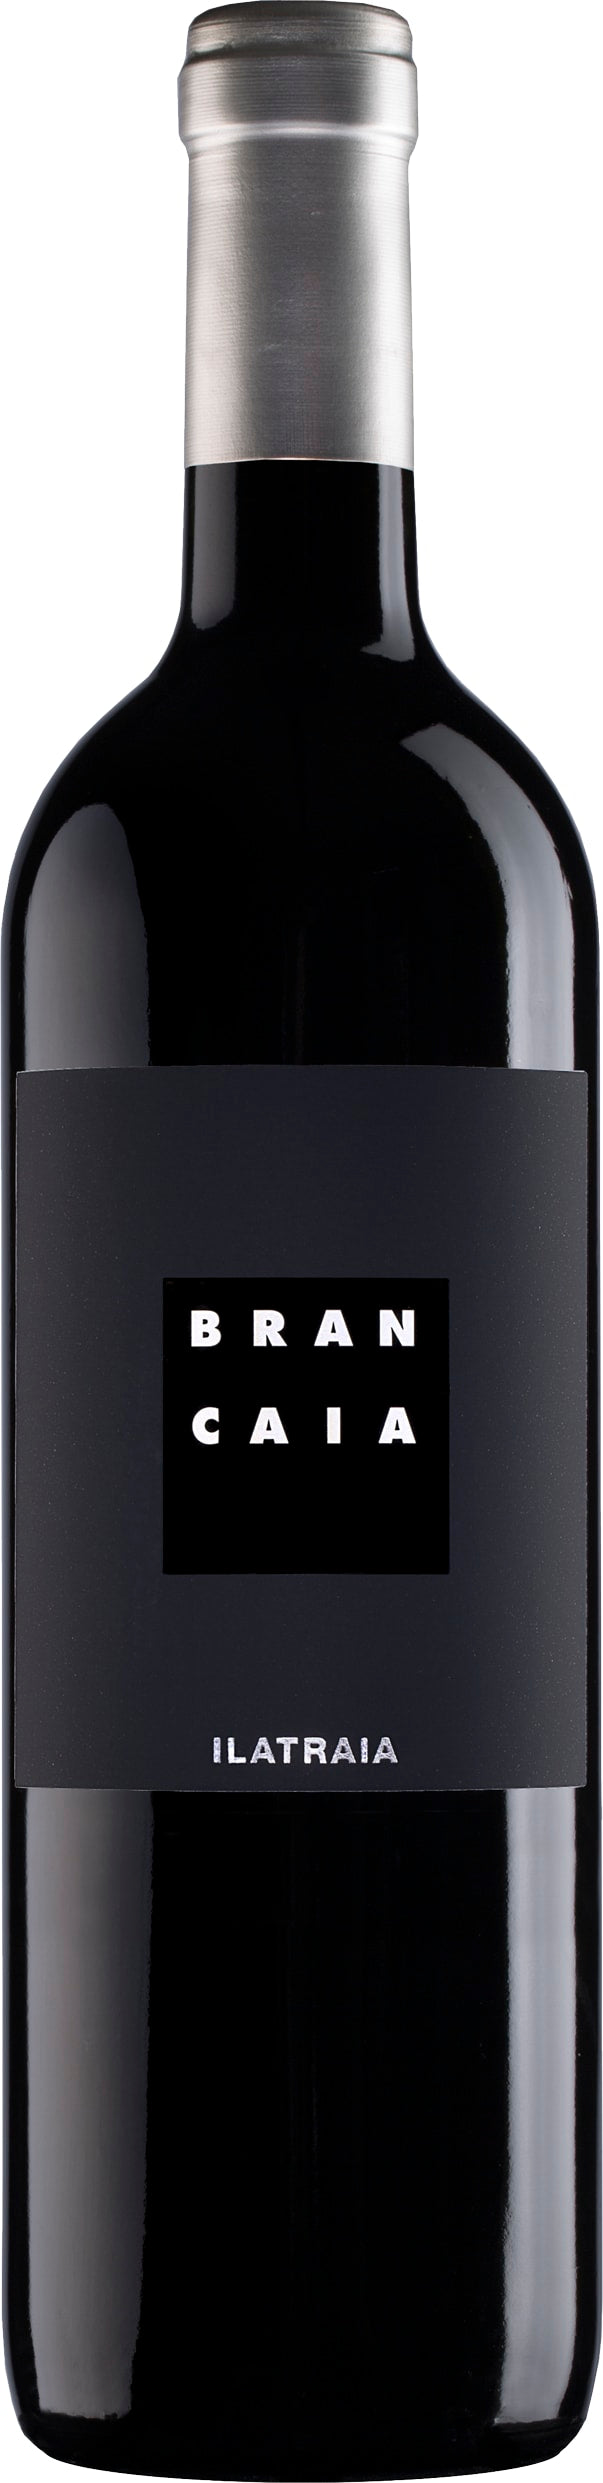 La Brancaia Ilatraia IGT Maremma, Brancaia 2017 150cl - Buy La Brancaia Wines from GREAT WINES DIRECT wine shop